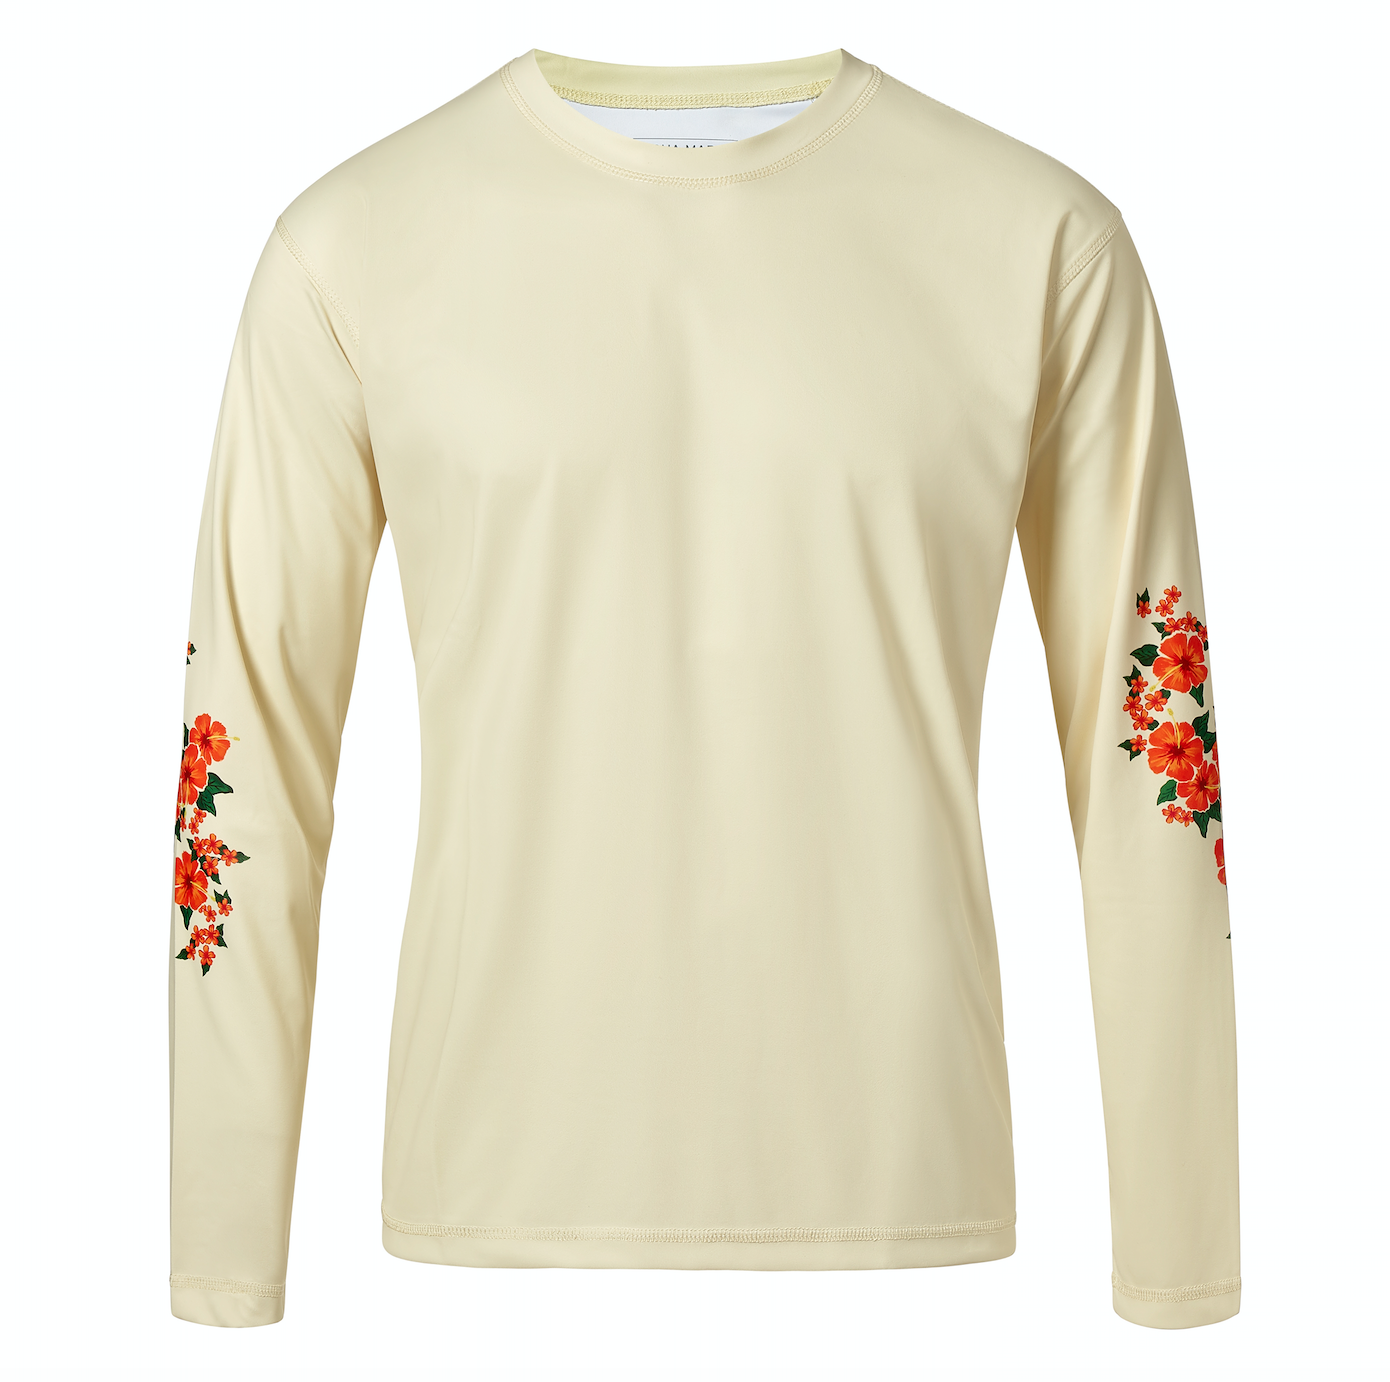 Men's Reef Shirt - Pale Yellow